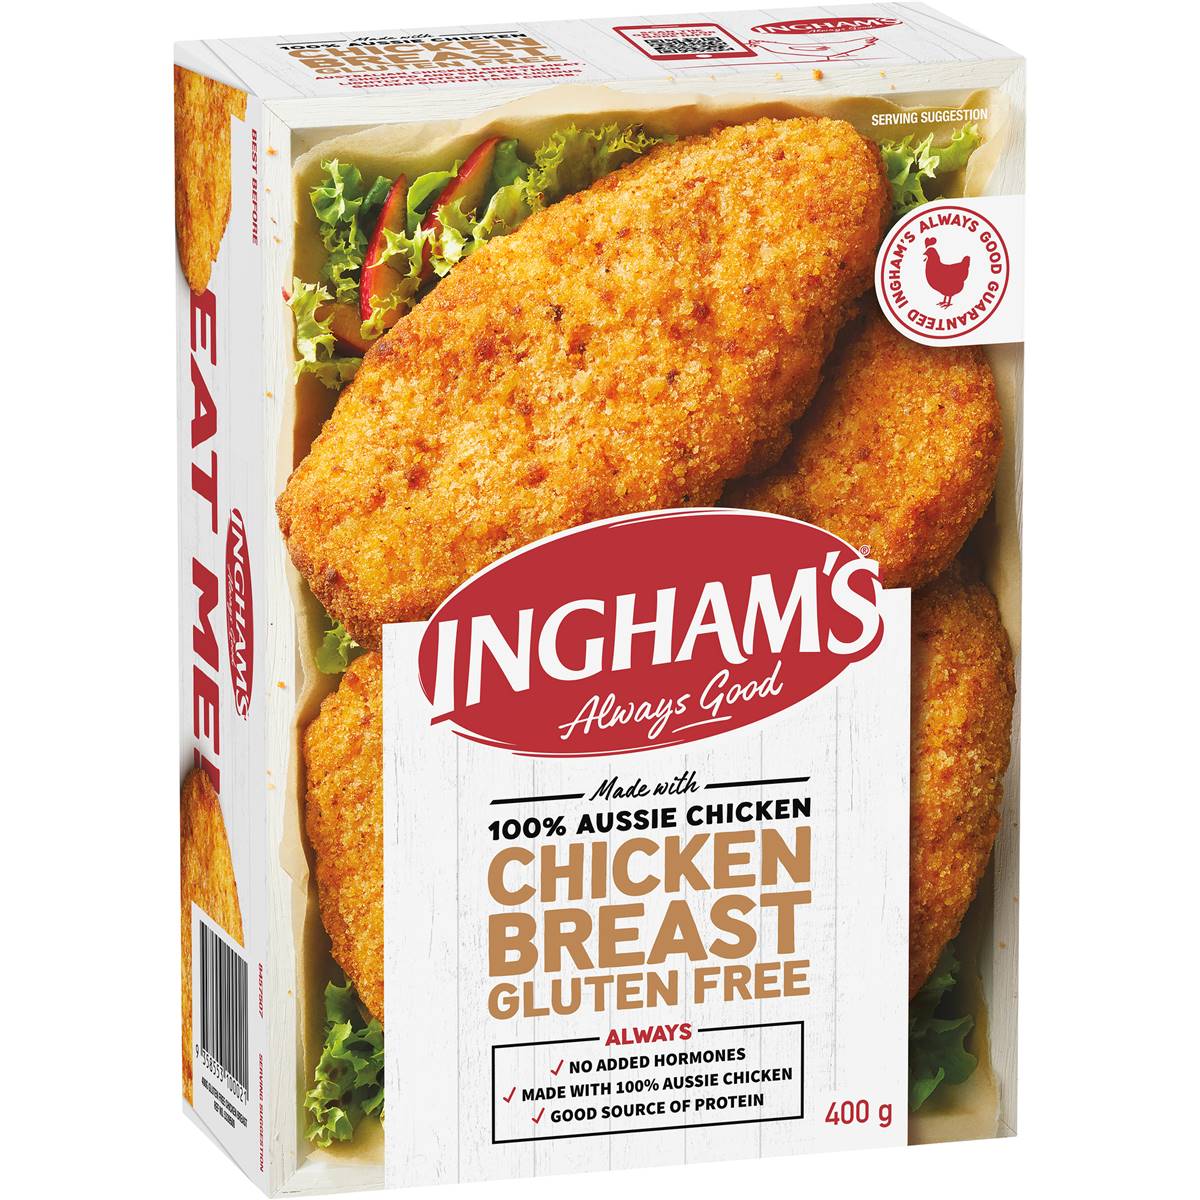 Ingham Breast Schnitzel Gluten Free